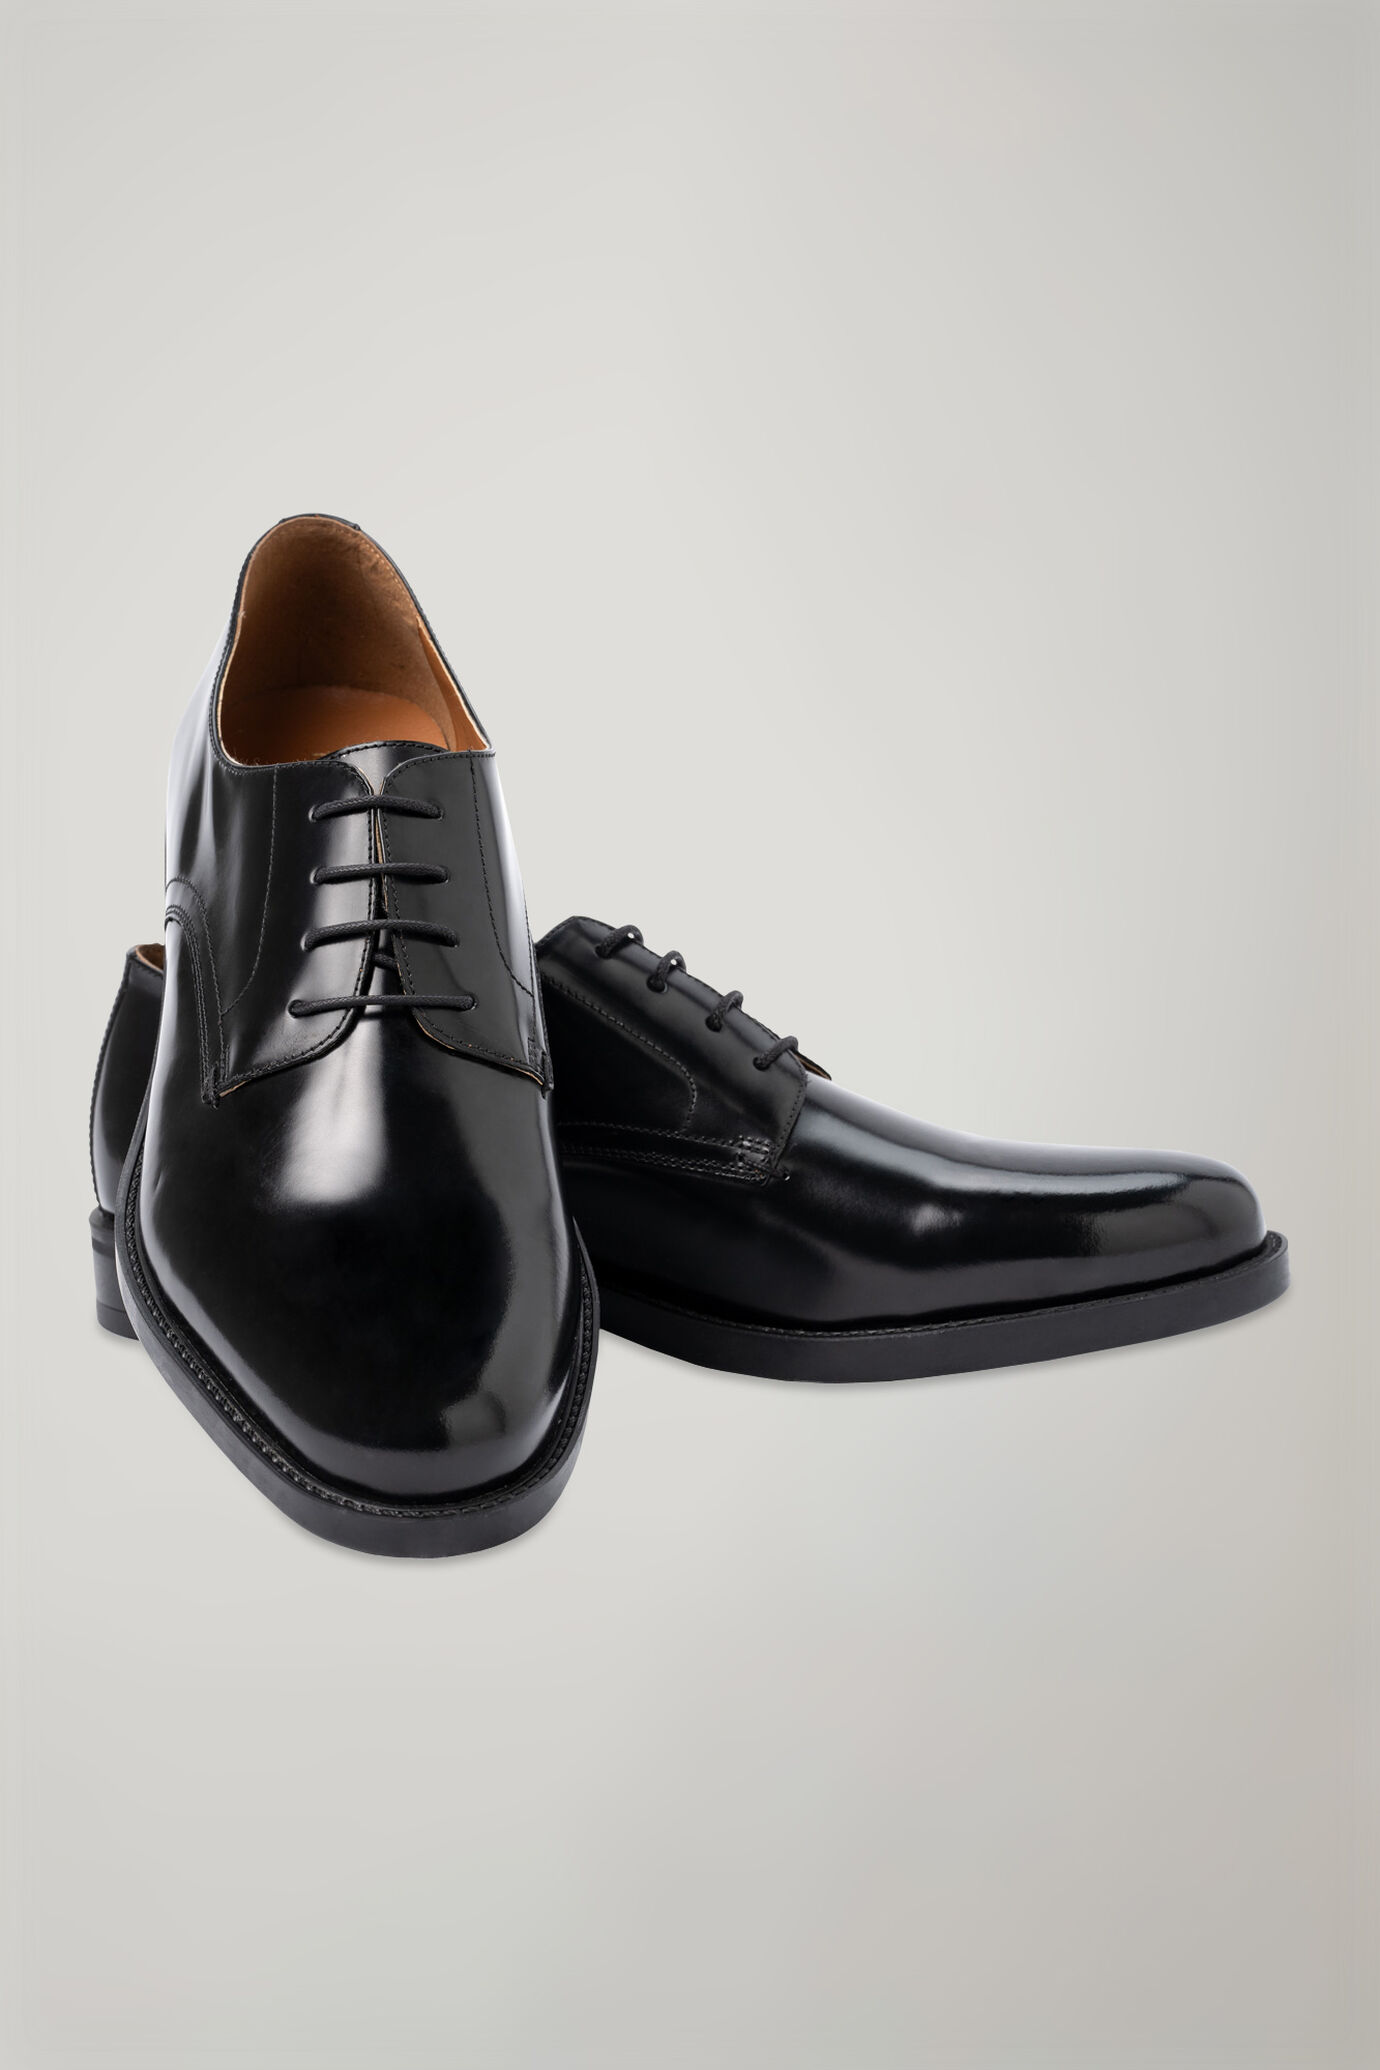 Men's derby shoes 100% leather